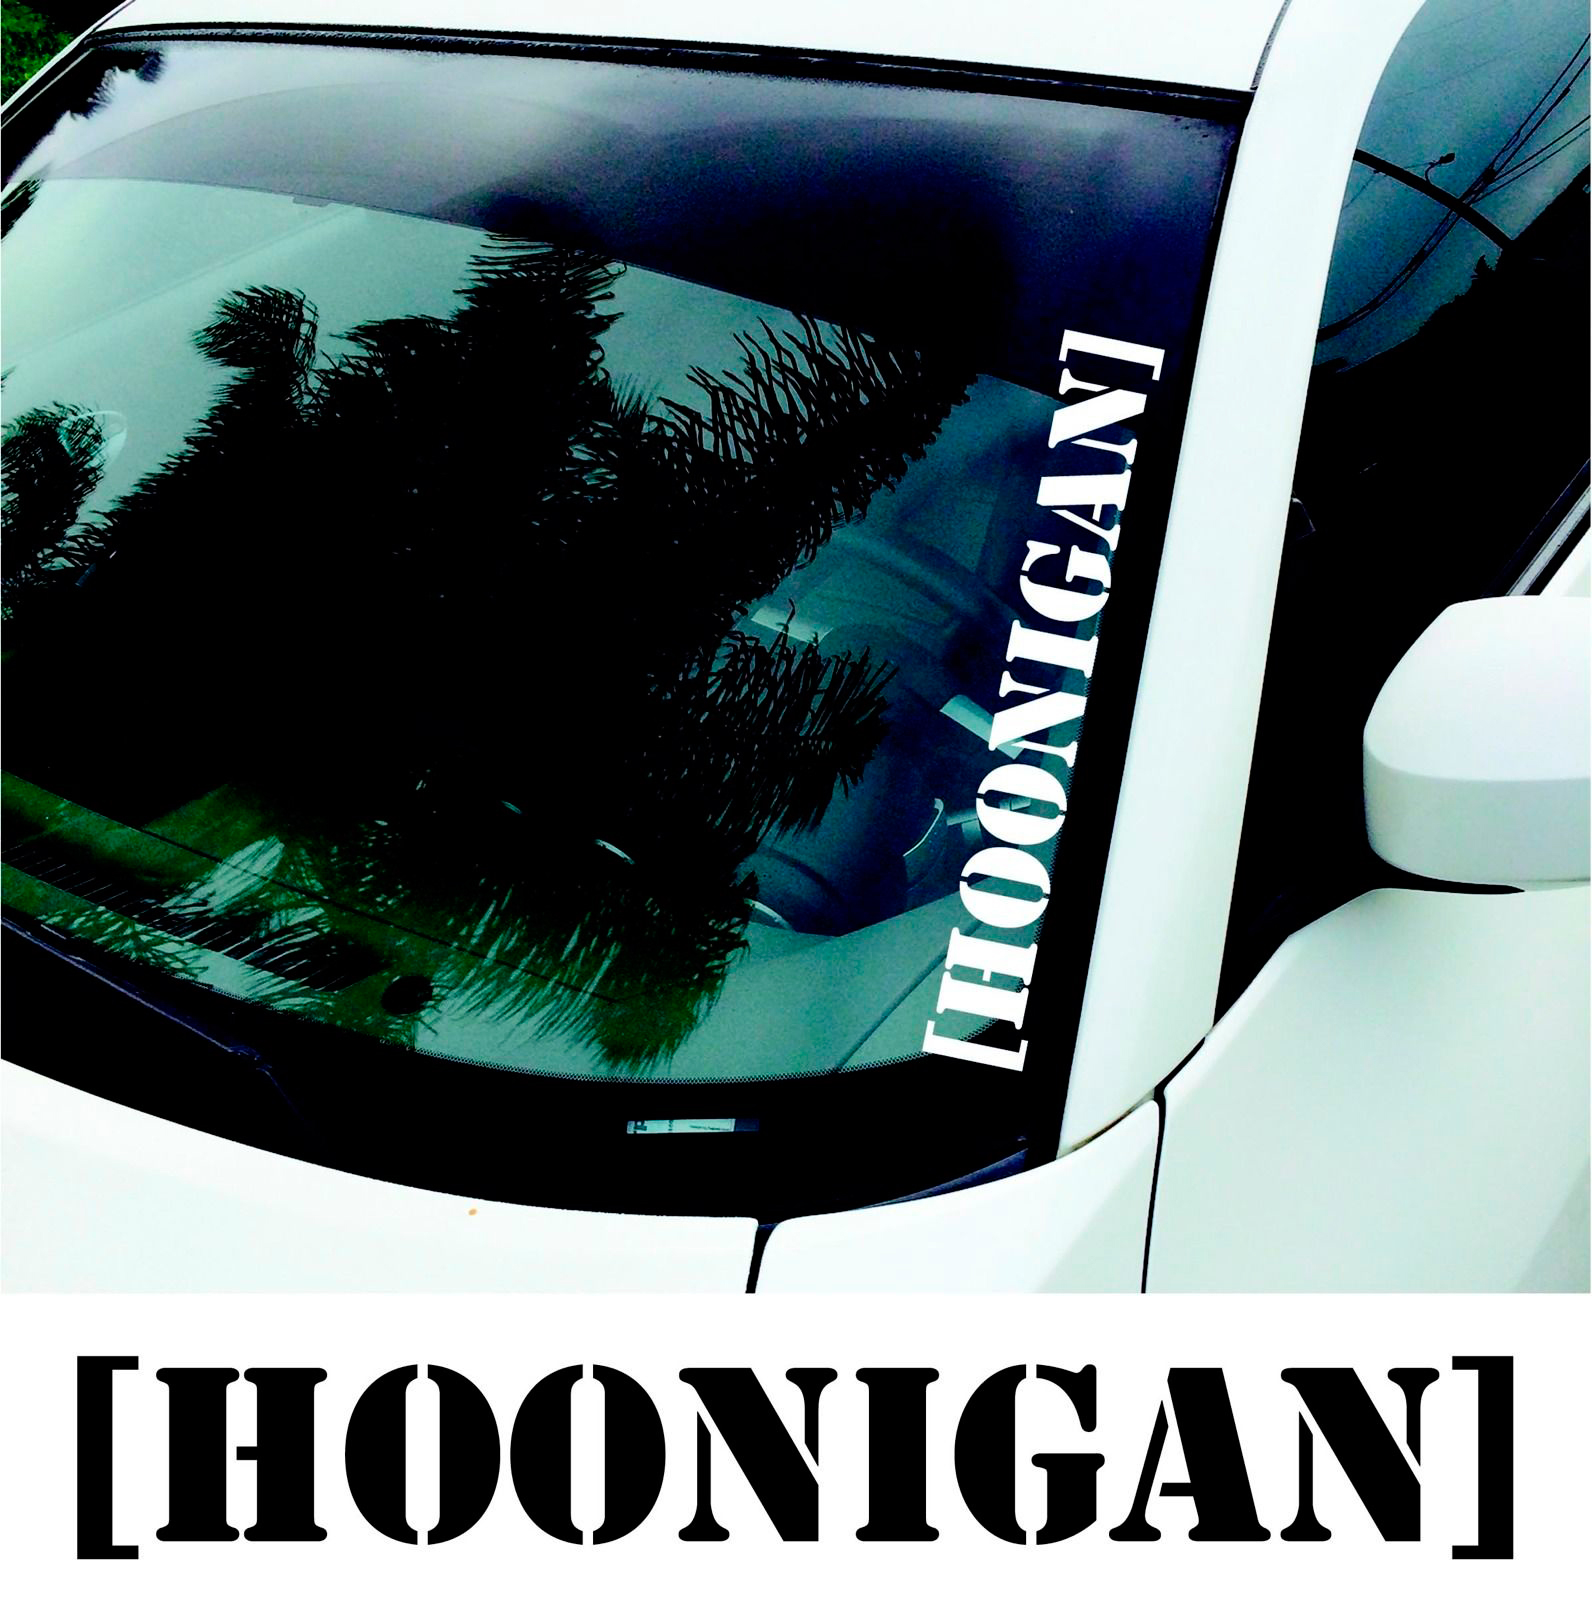 Hoonigan Car Sticker Racing JDM Driver Drift Euro Tuner Aggressive Vinyl Decal 